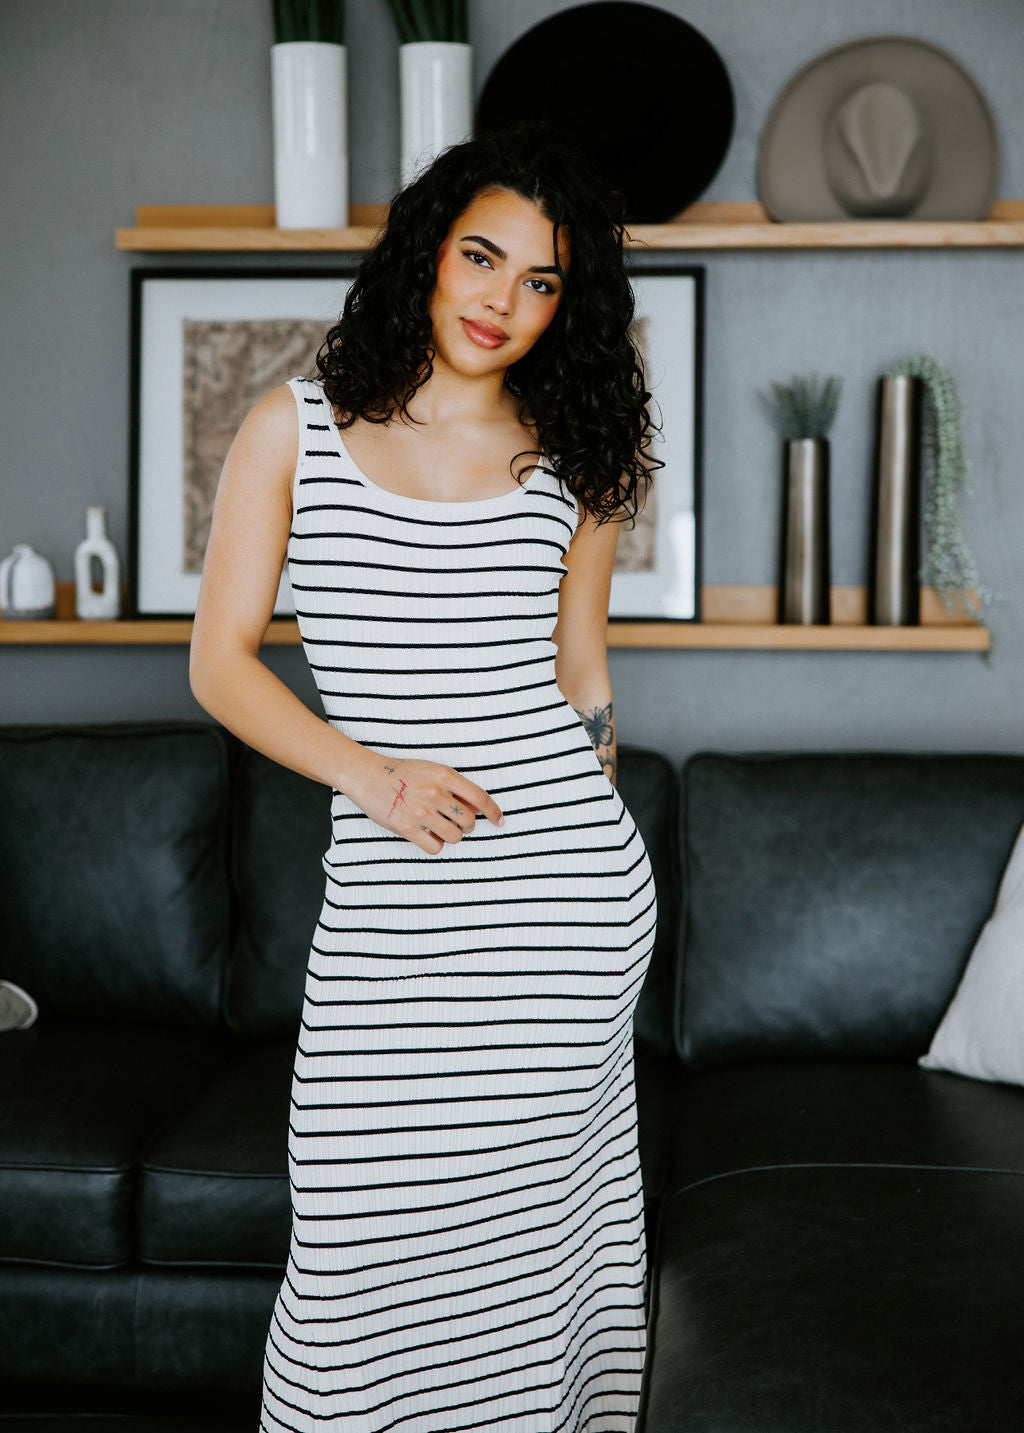 Ora Striped Maxi Dress